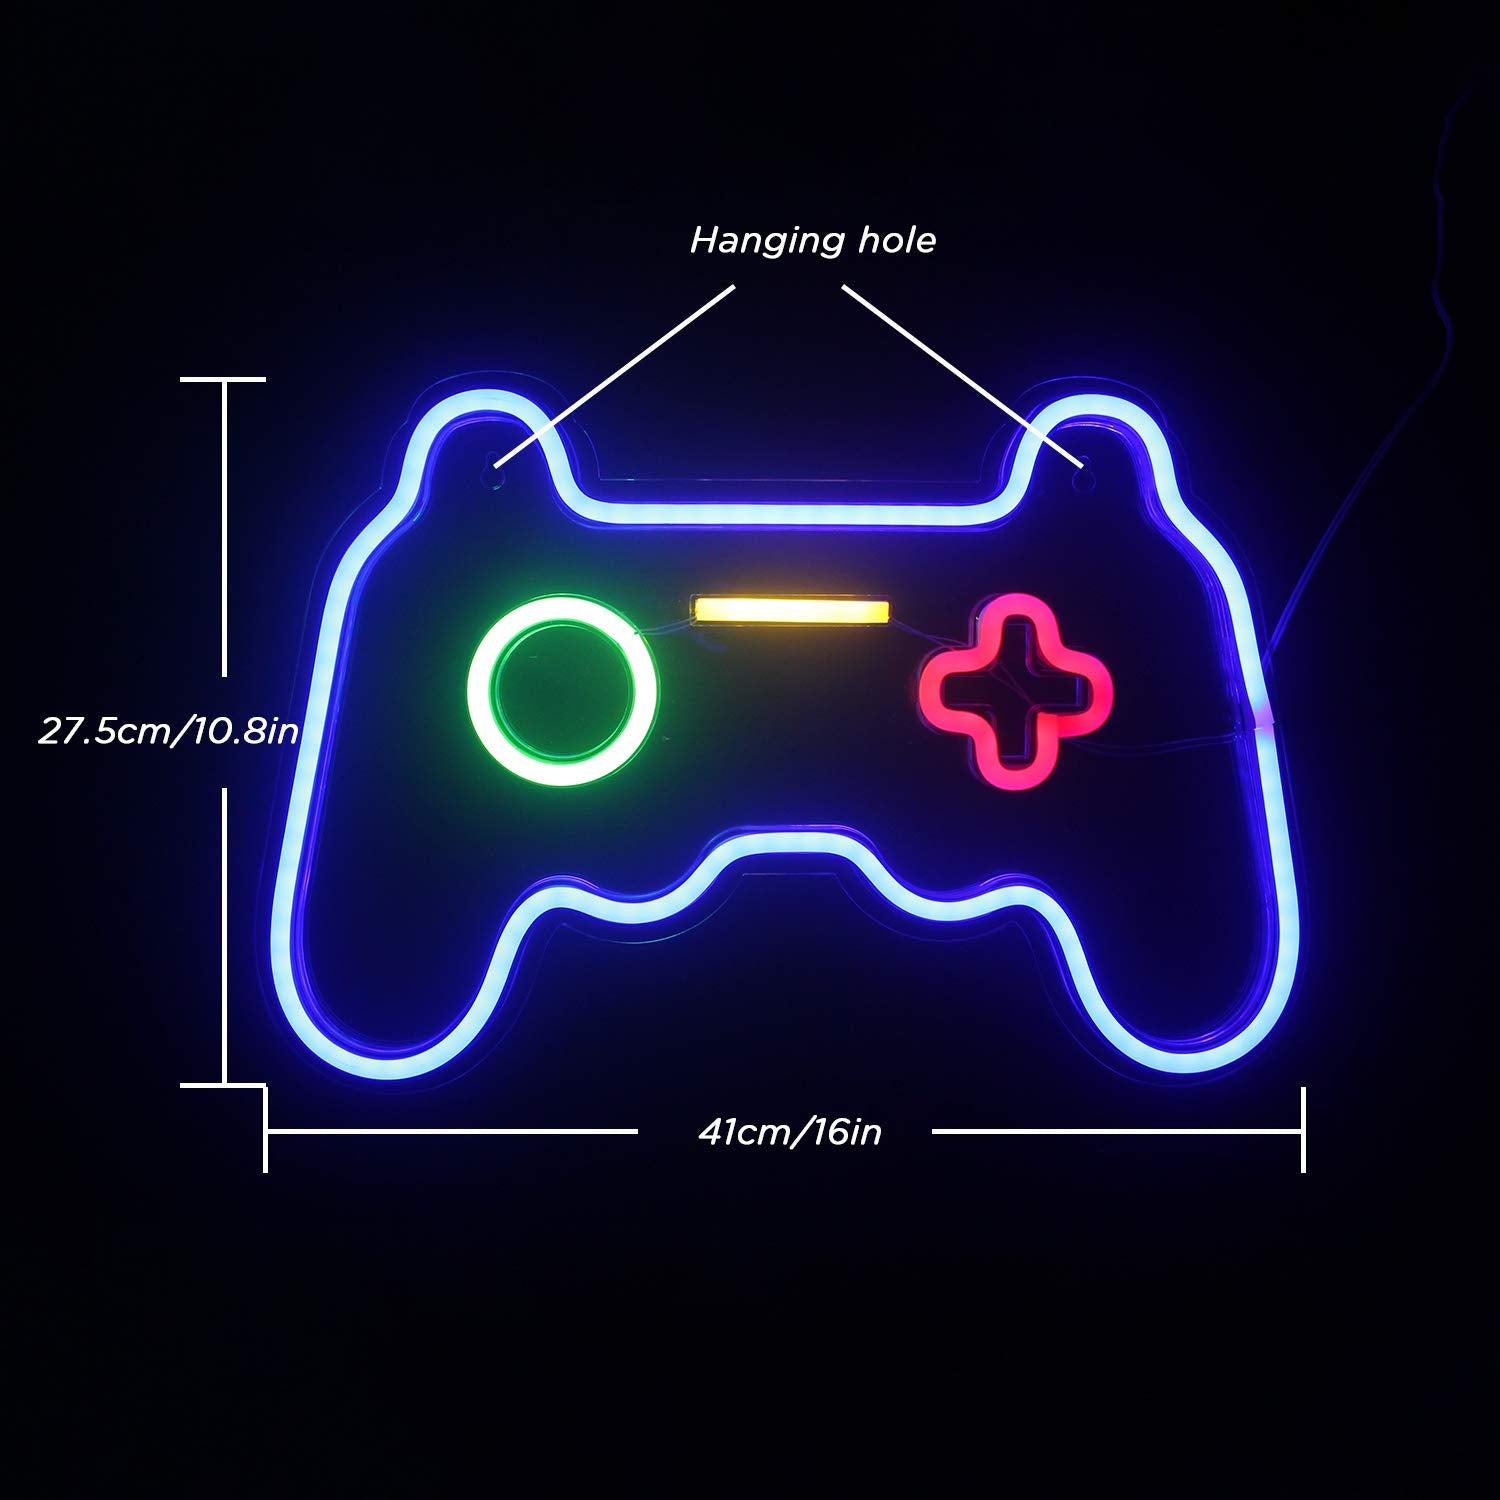 Neon Game Controller Sign